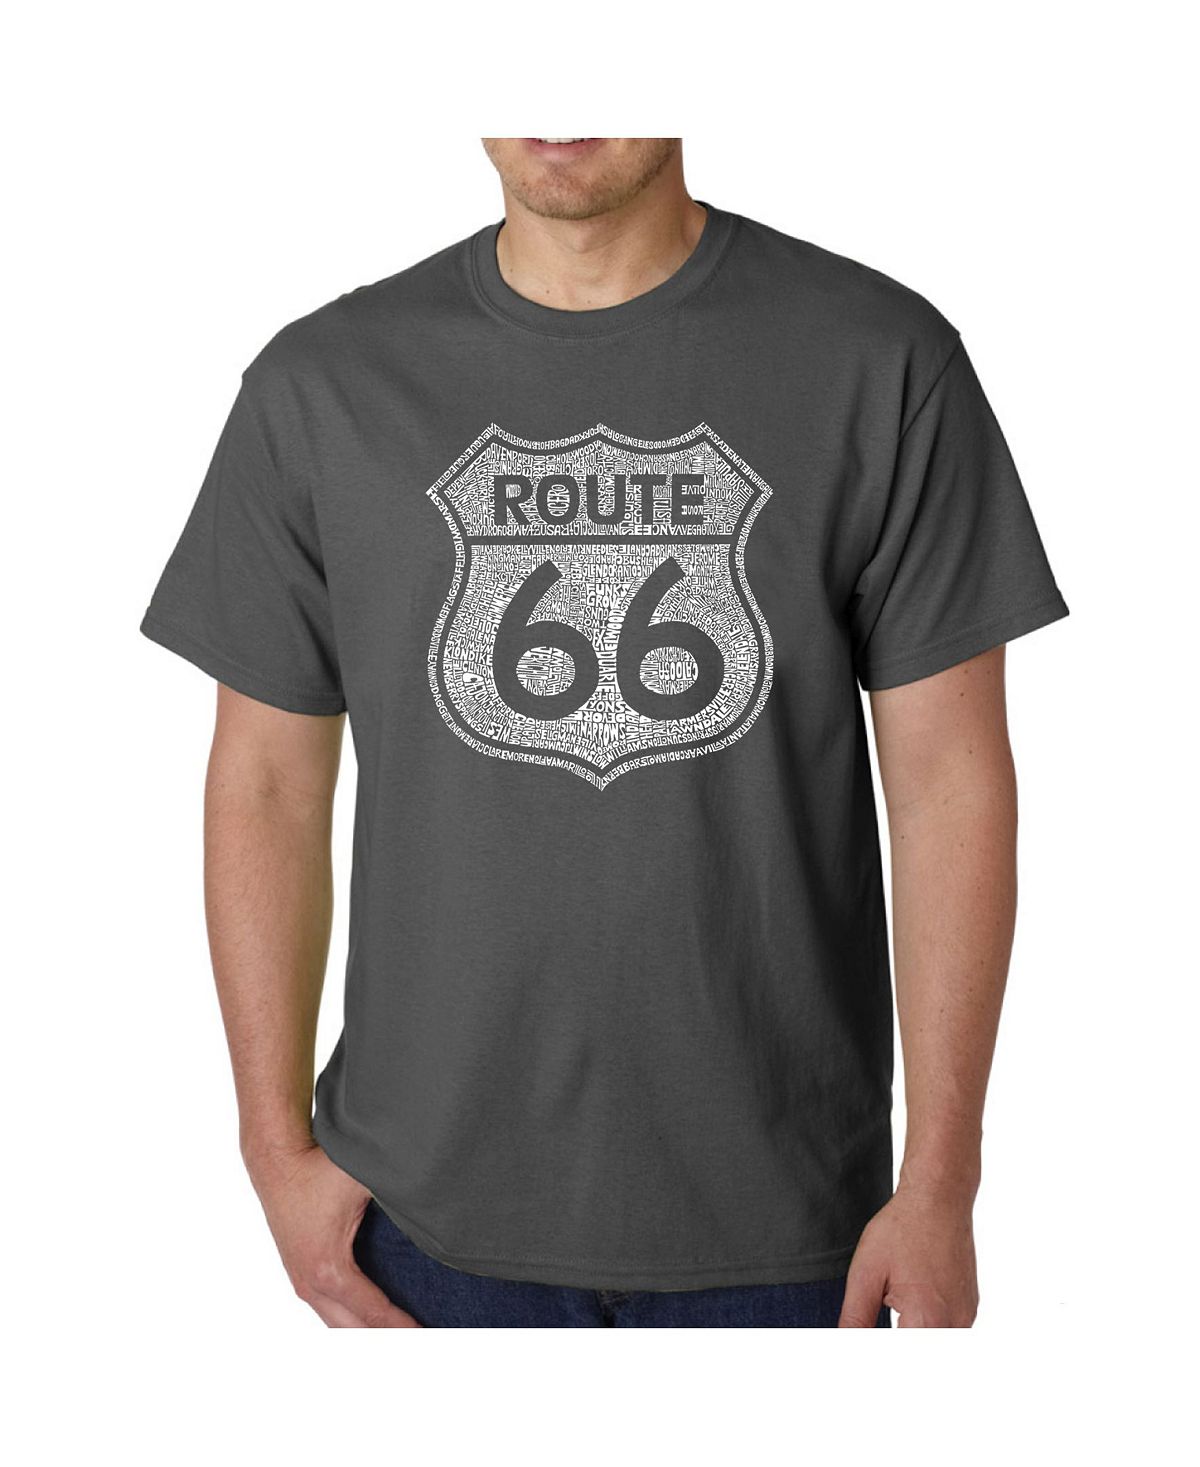 Мужская футболка с рисунком Word Art — Route 66 LA Pop Art мужская футболка с длинным рукавом word art route 66 la pop art черный